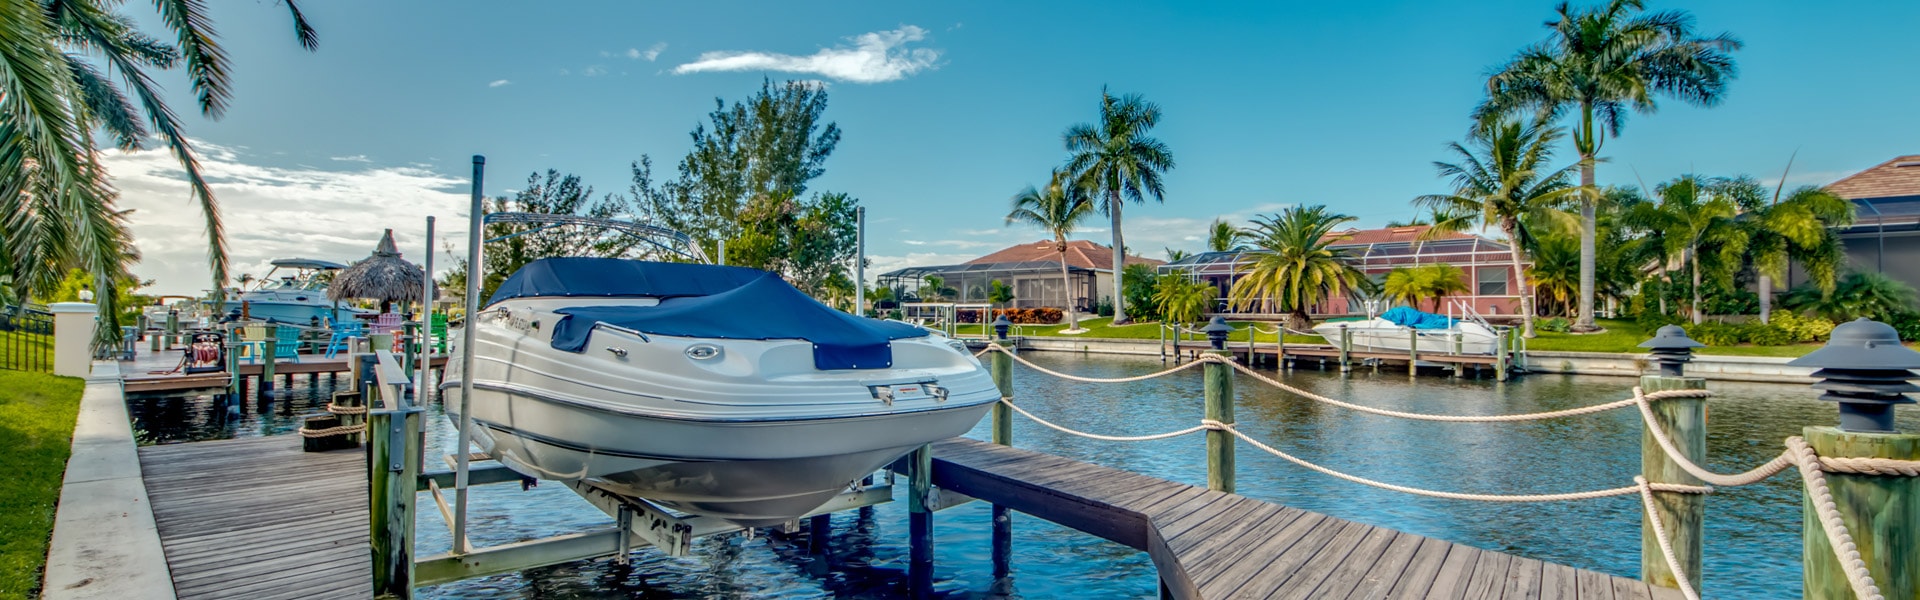 Florida Haus mit Boot mieten